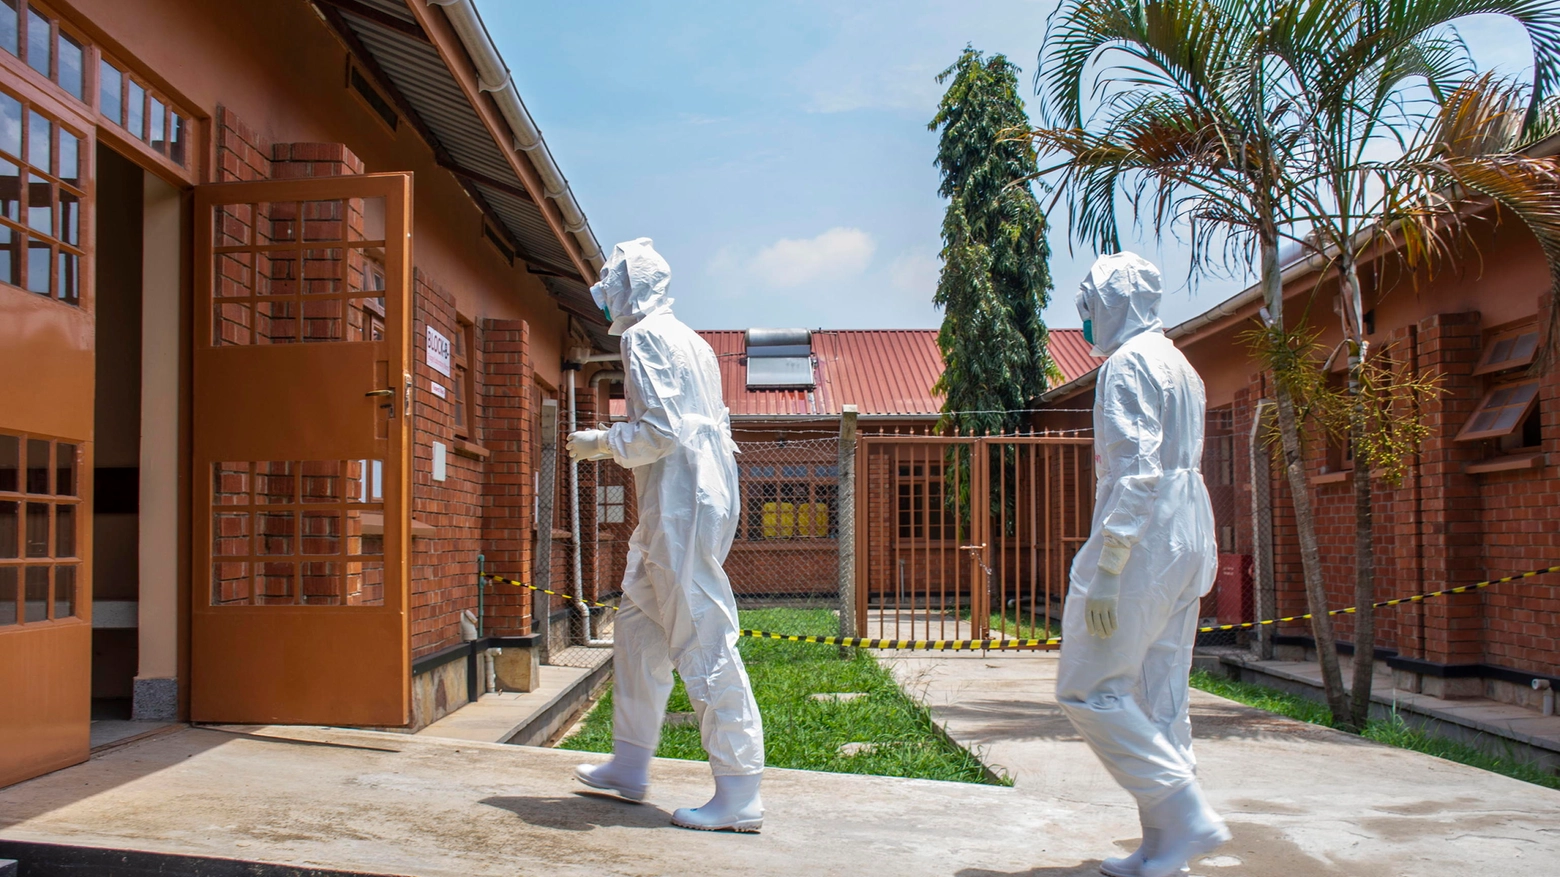 Operatori sanitari in Uganda durante l'epidemia di Ebola (Ansa)